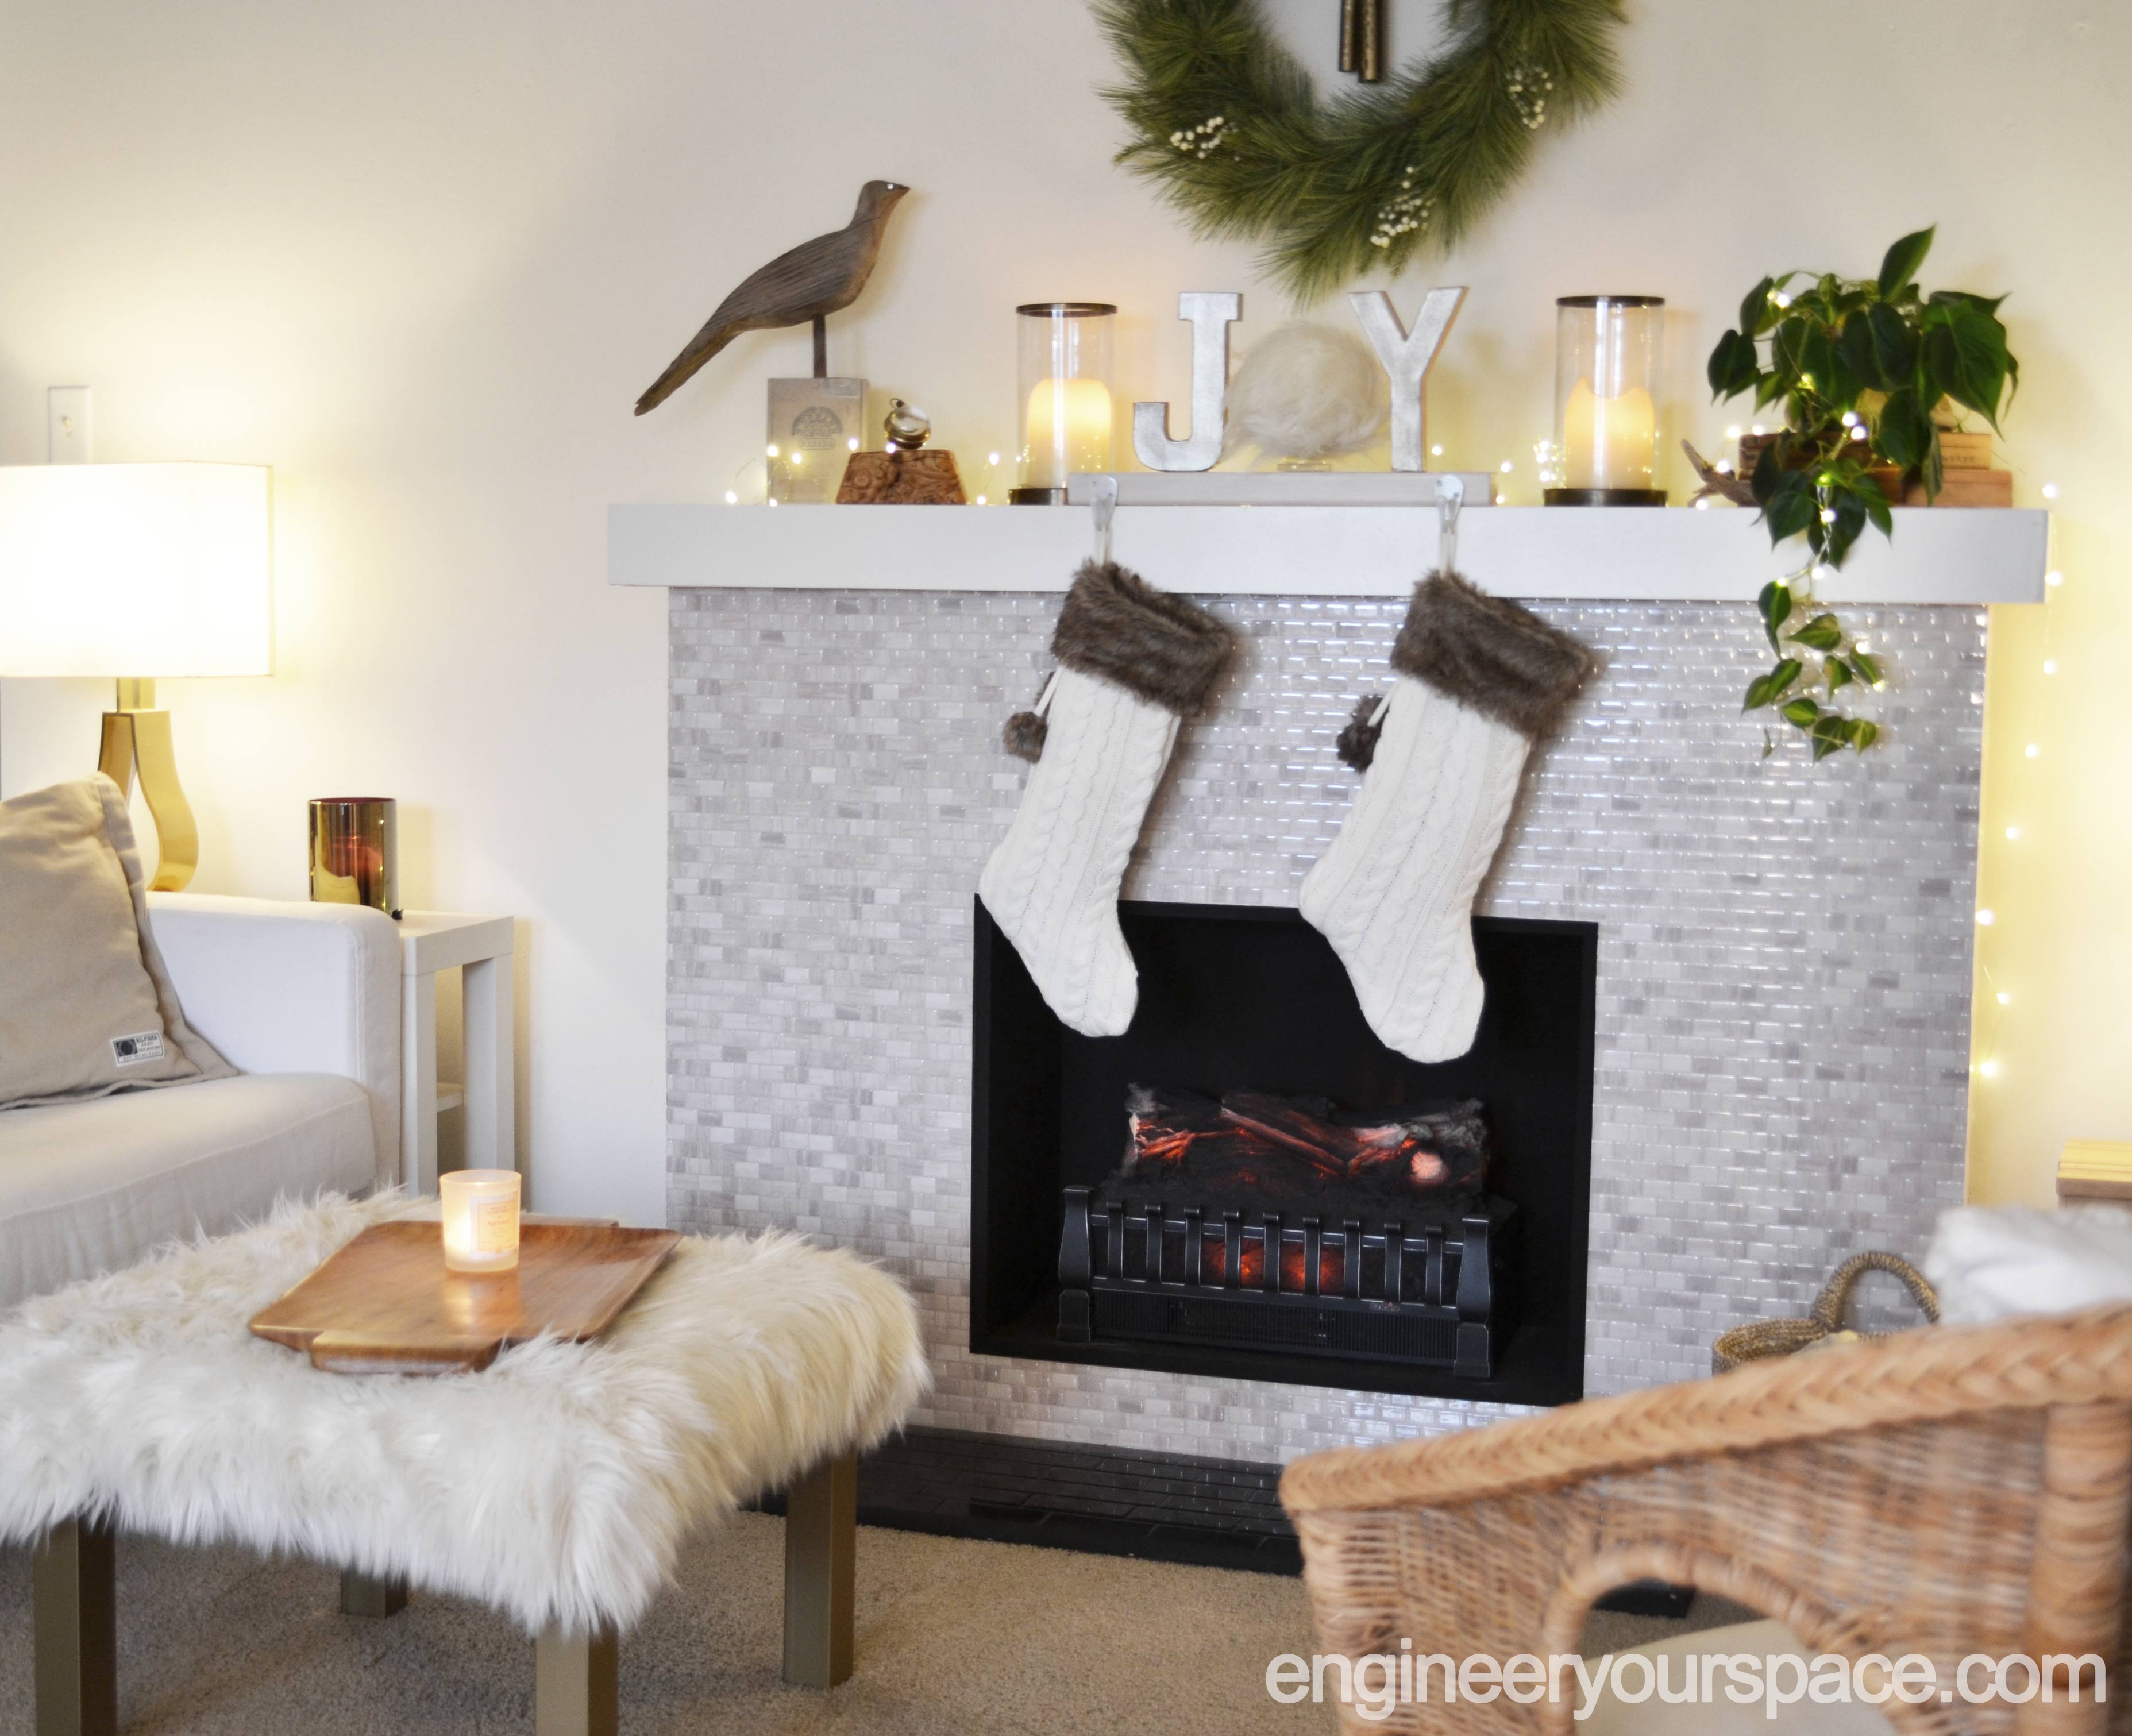 Fireplace-mantel-stocking-holder-wide-view.jpg